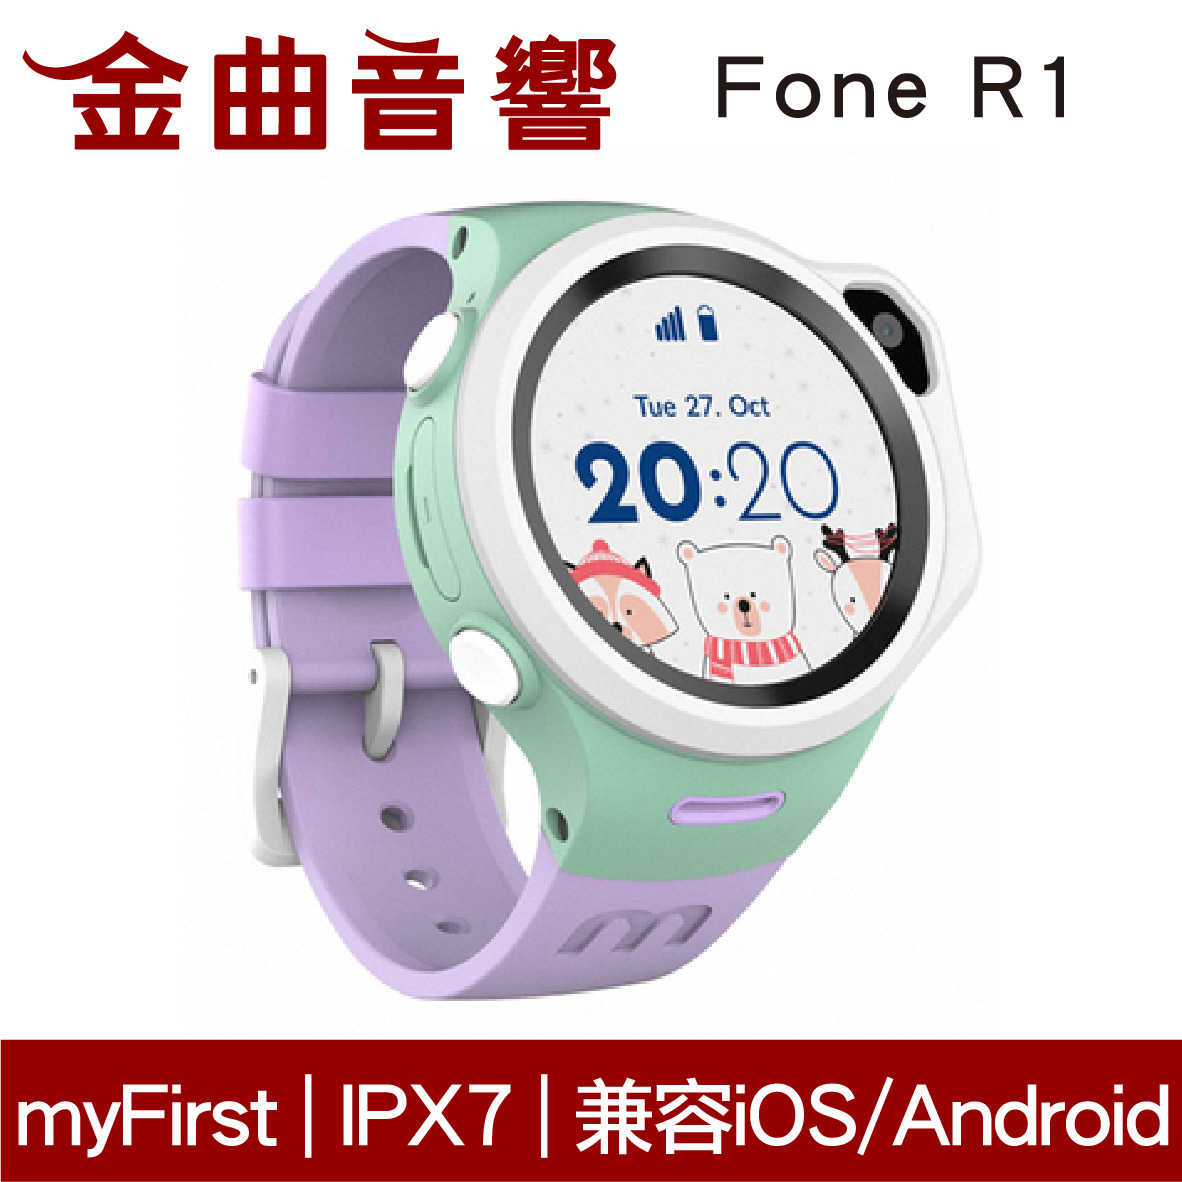 myFirst Fone R1 紫色 視訊通話 IPX7 GPS定位 一鍵求救 4G 智慧兒童手錶 | 金曲音響